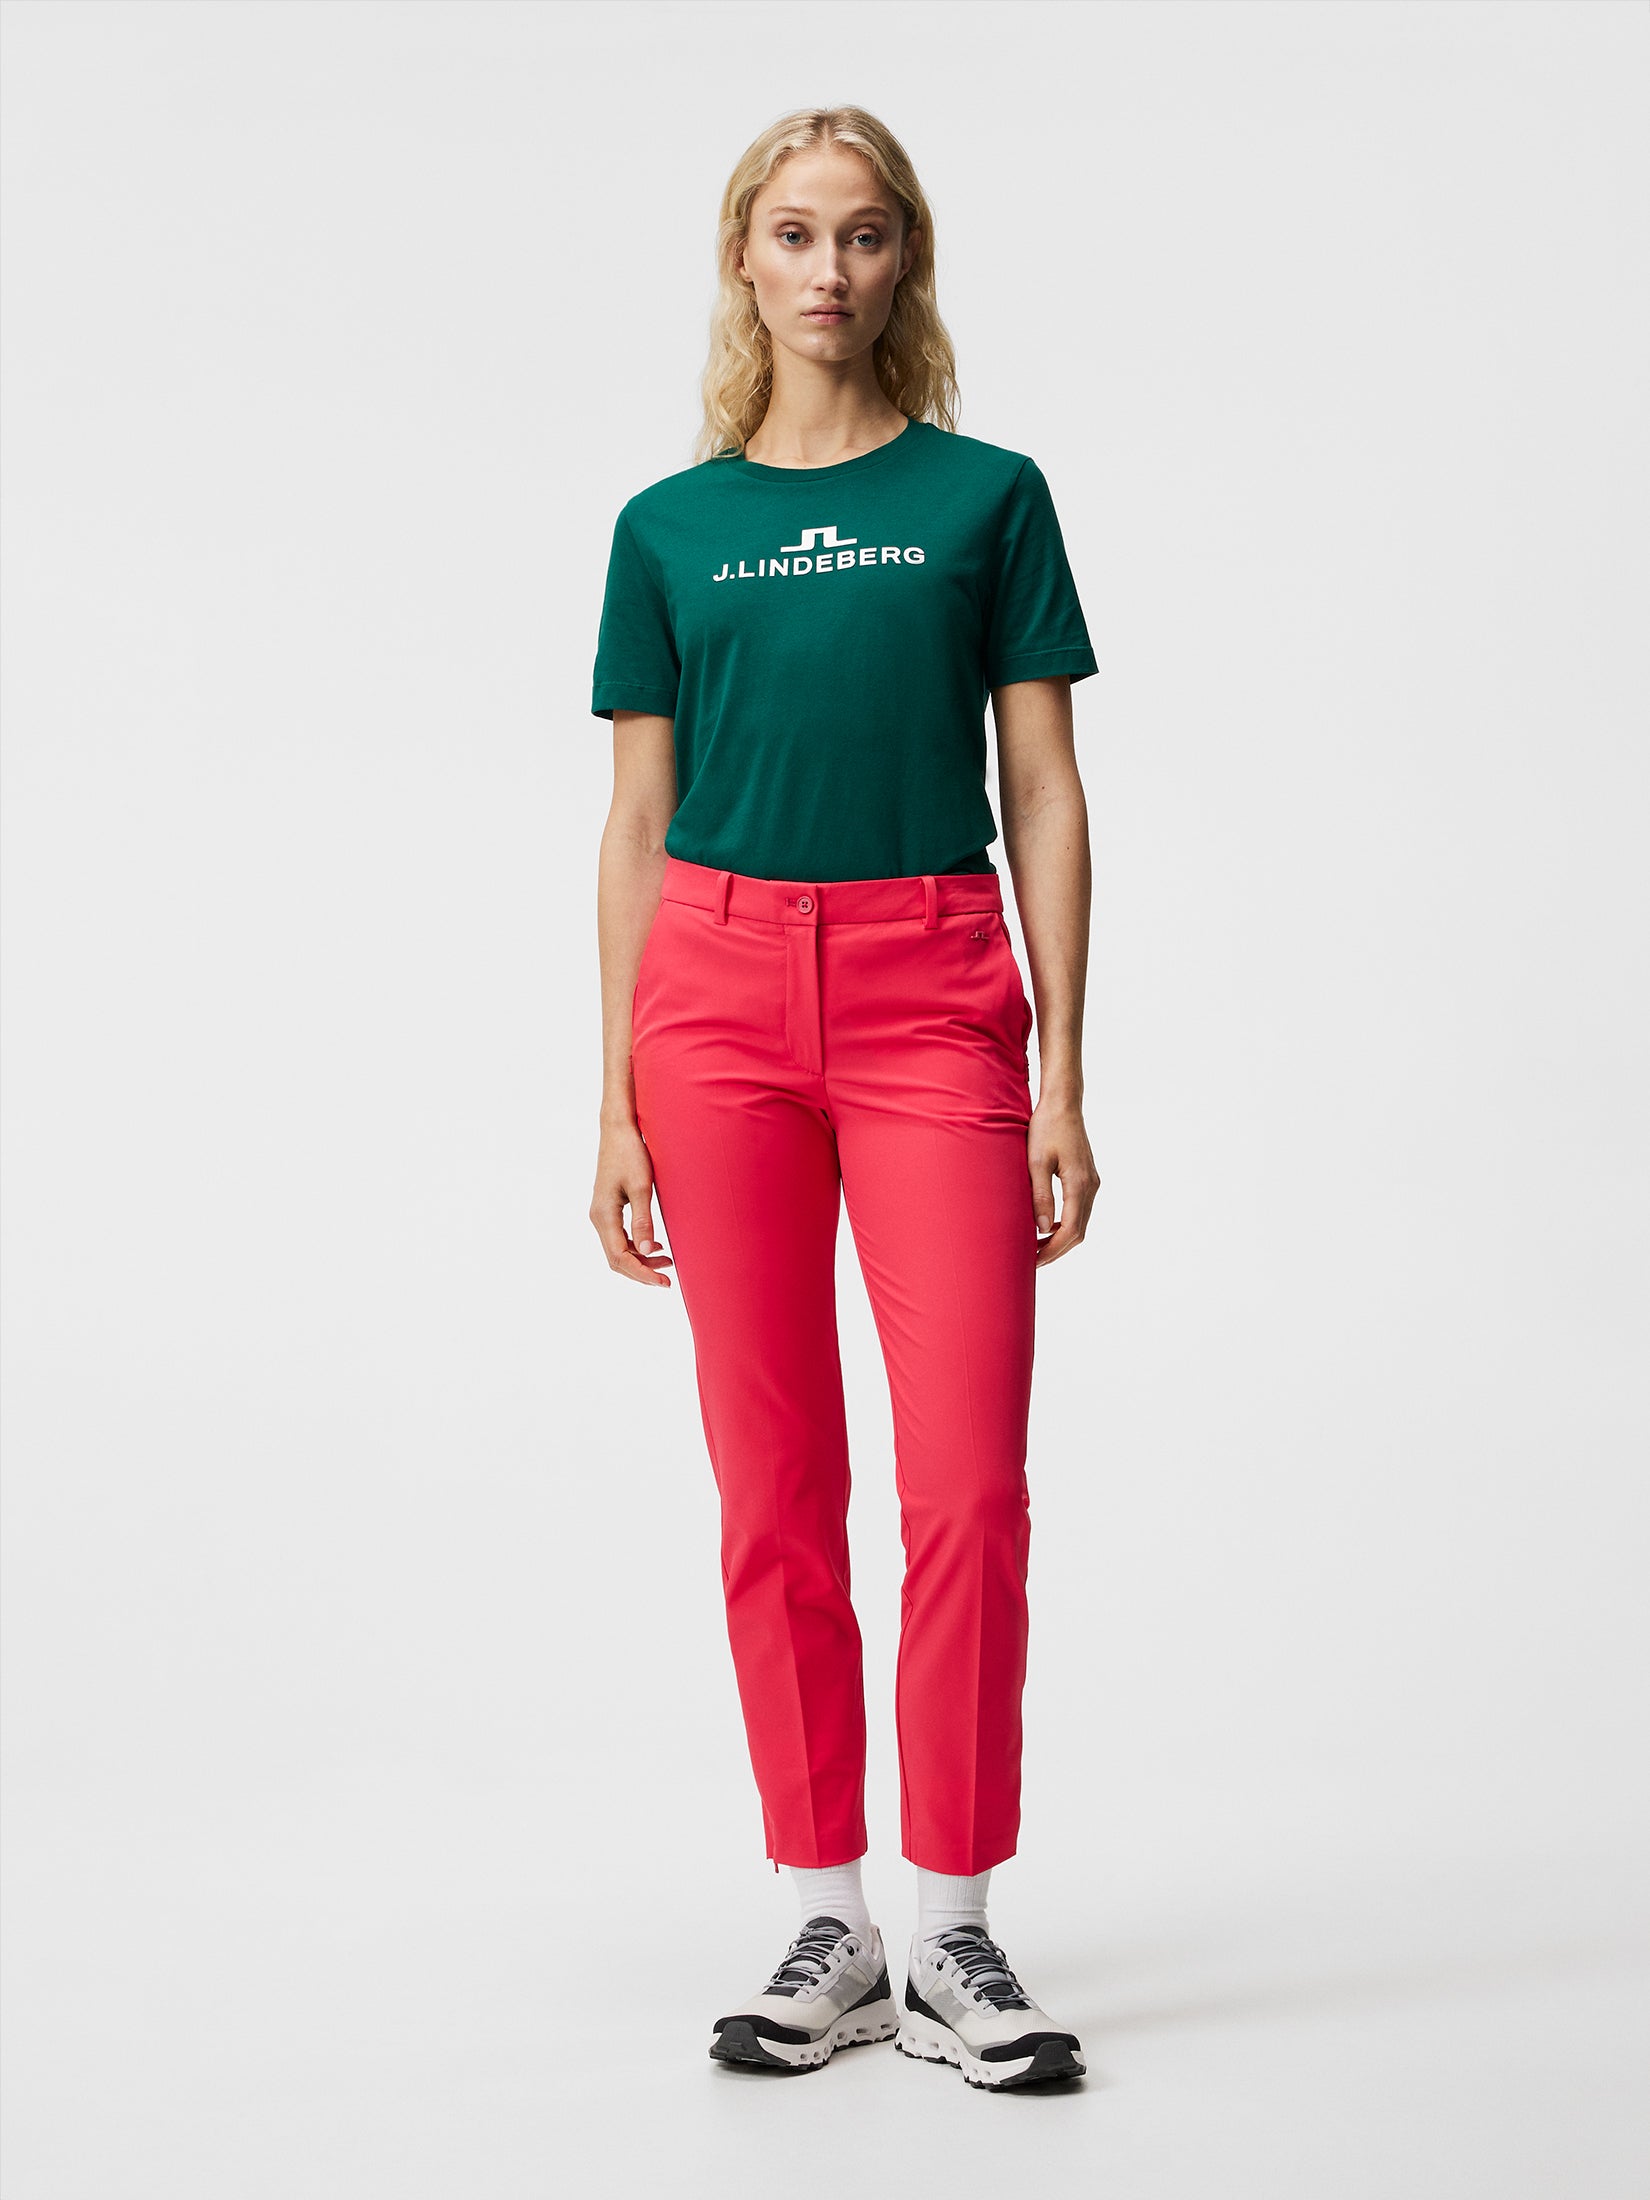 Slazenger Womens Golf Trousers Pants Bottoms Zip Standard Fit  eBay